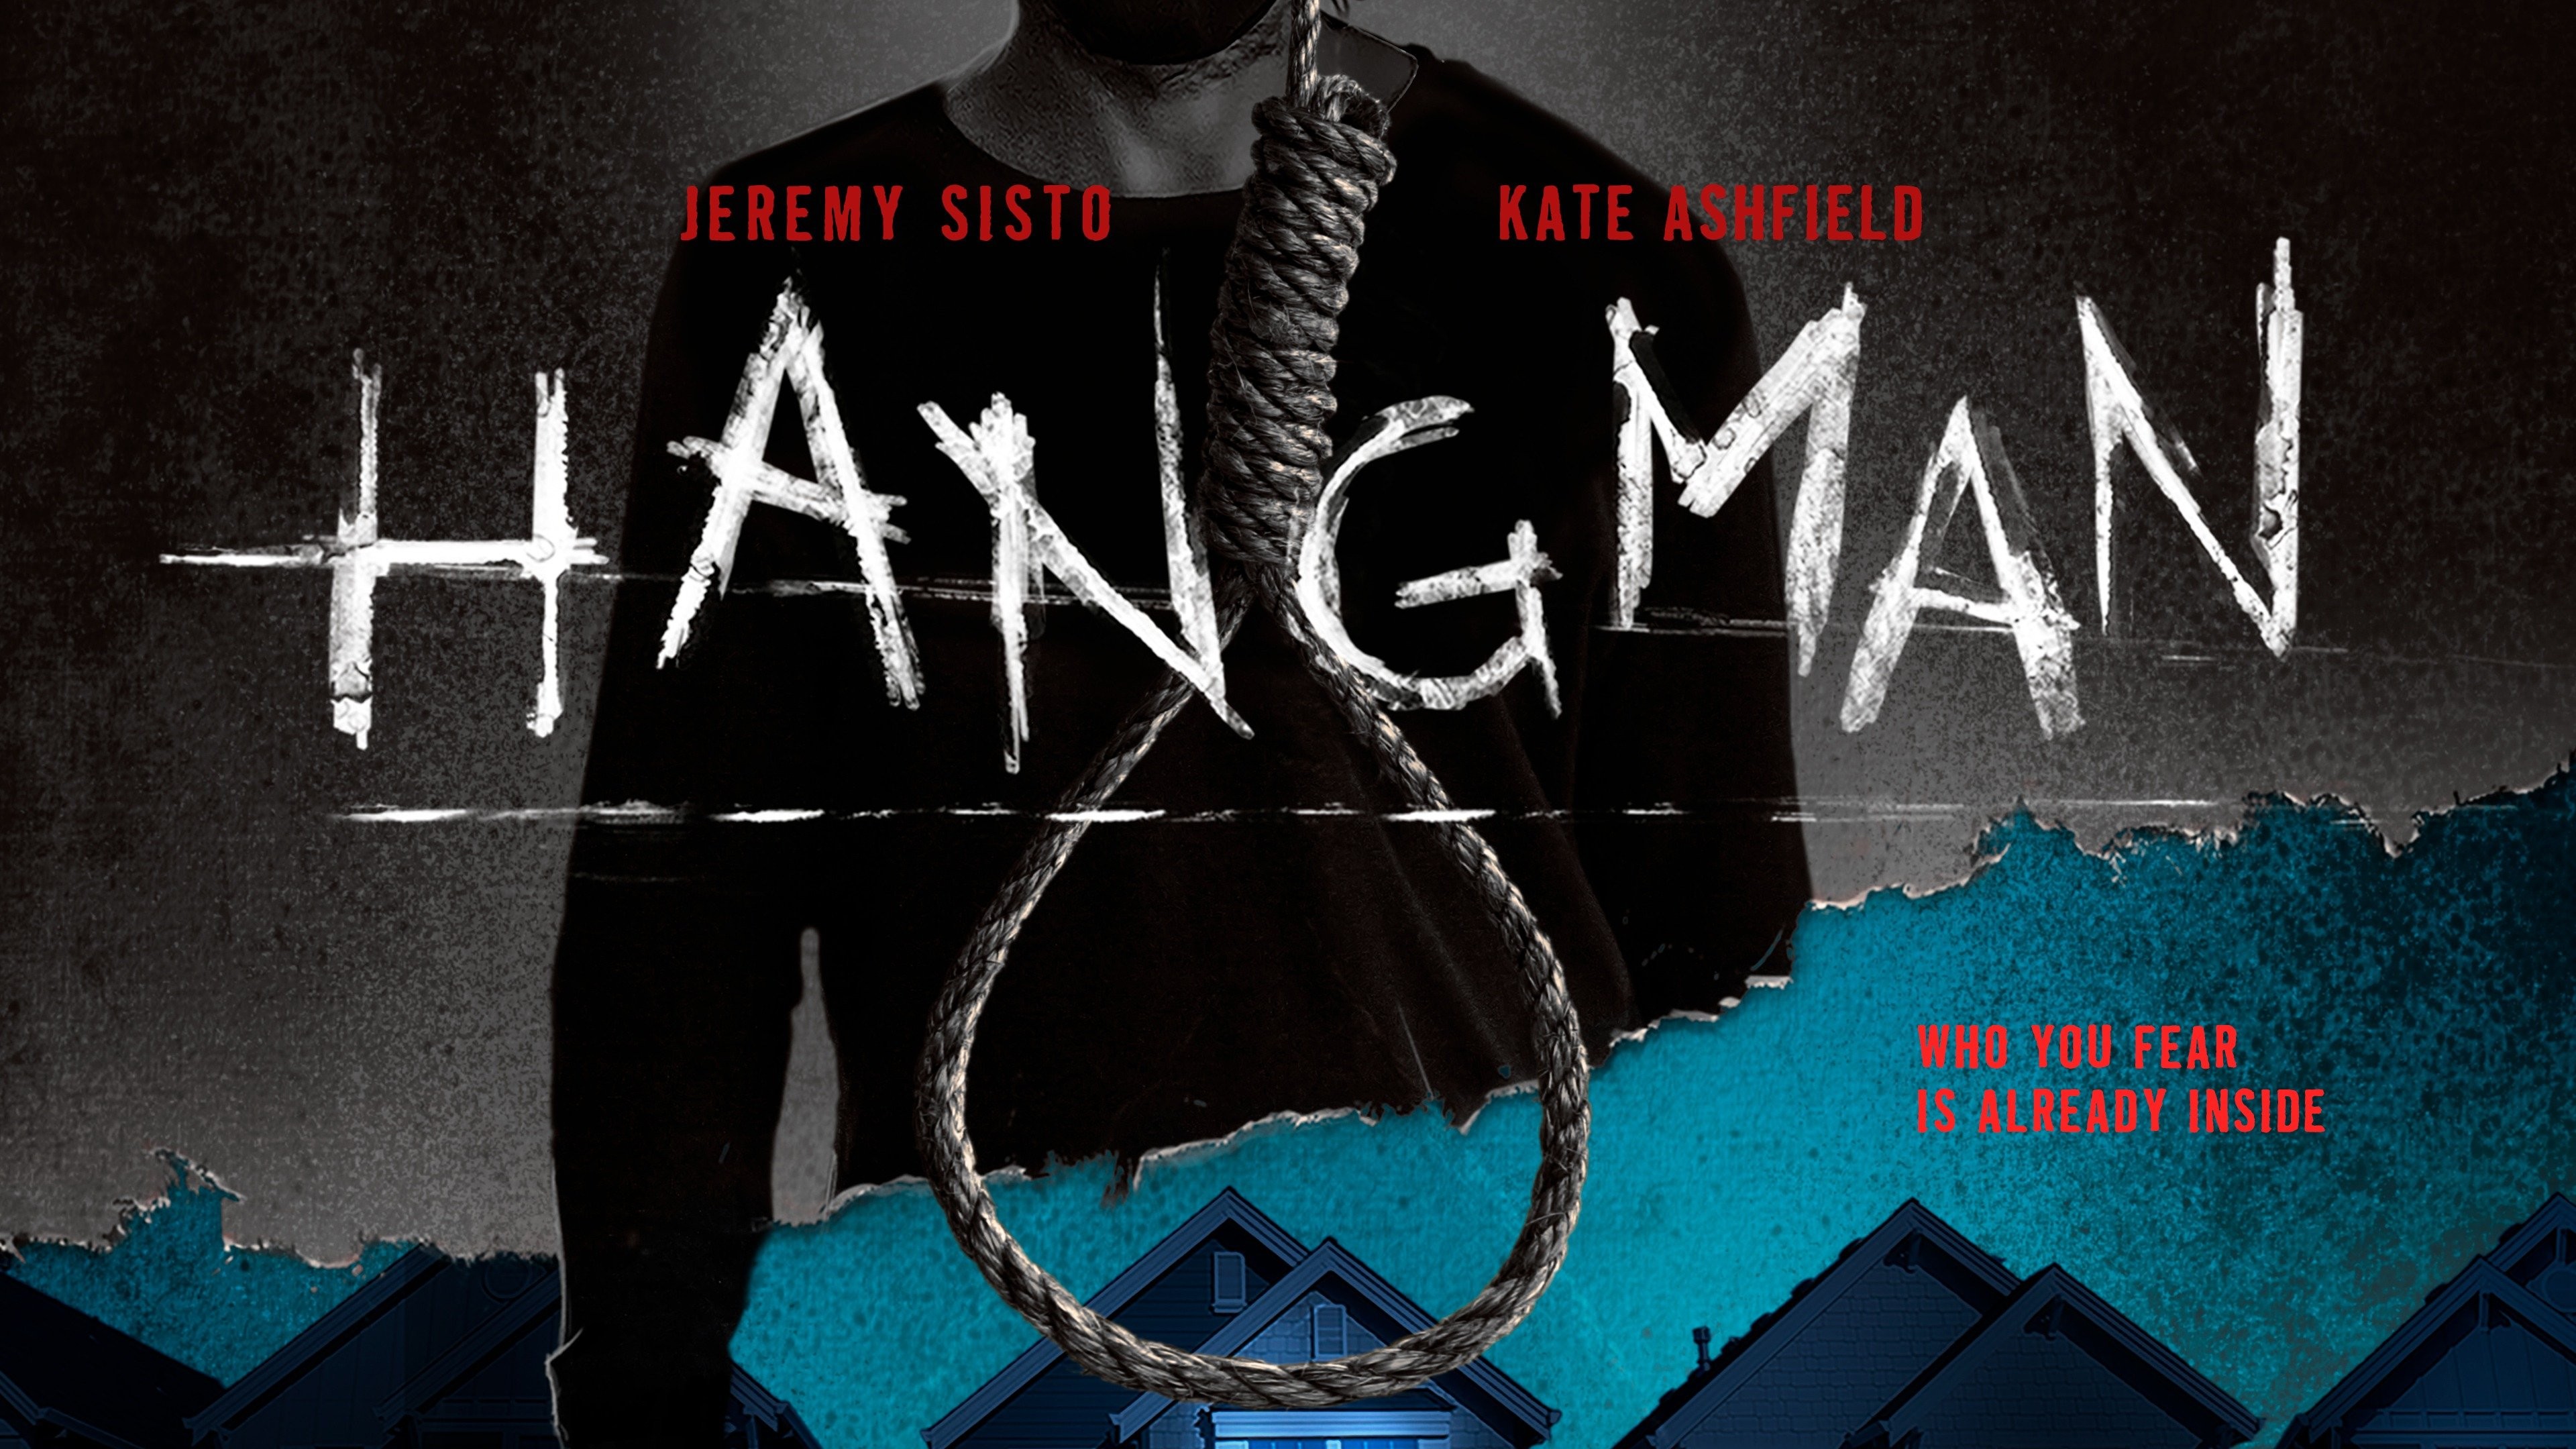 American Hangman - Rotten Tomatoes